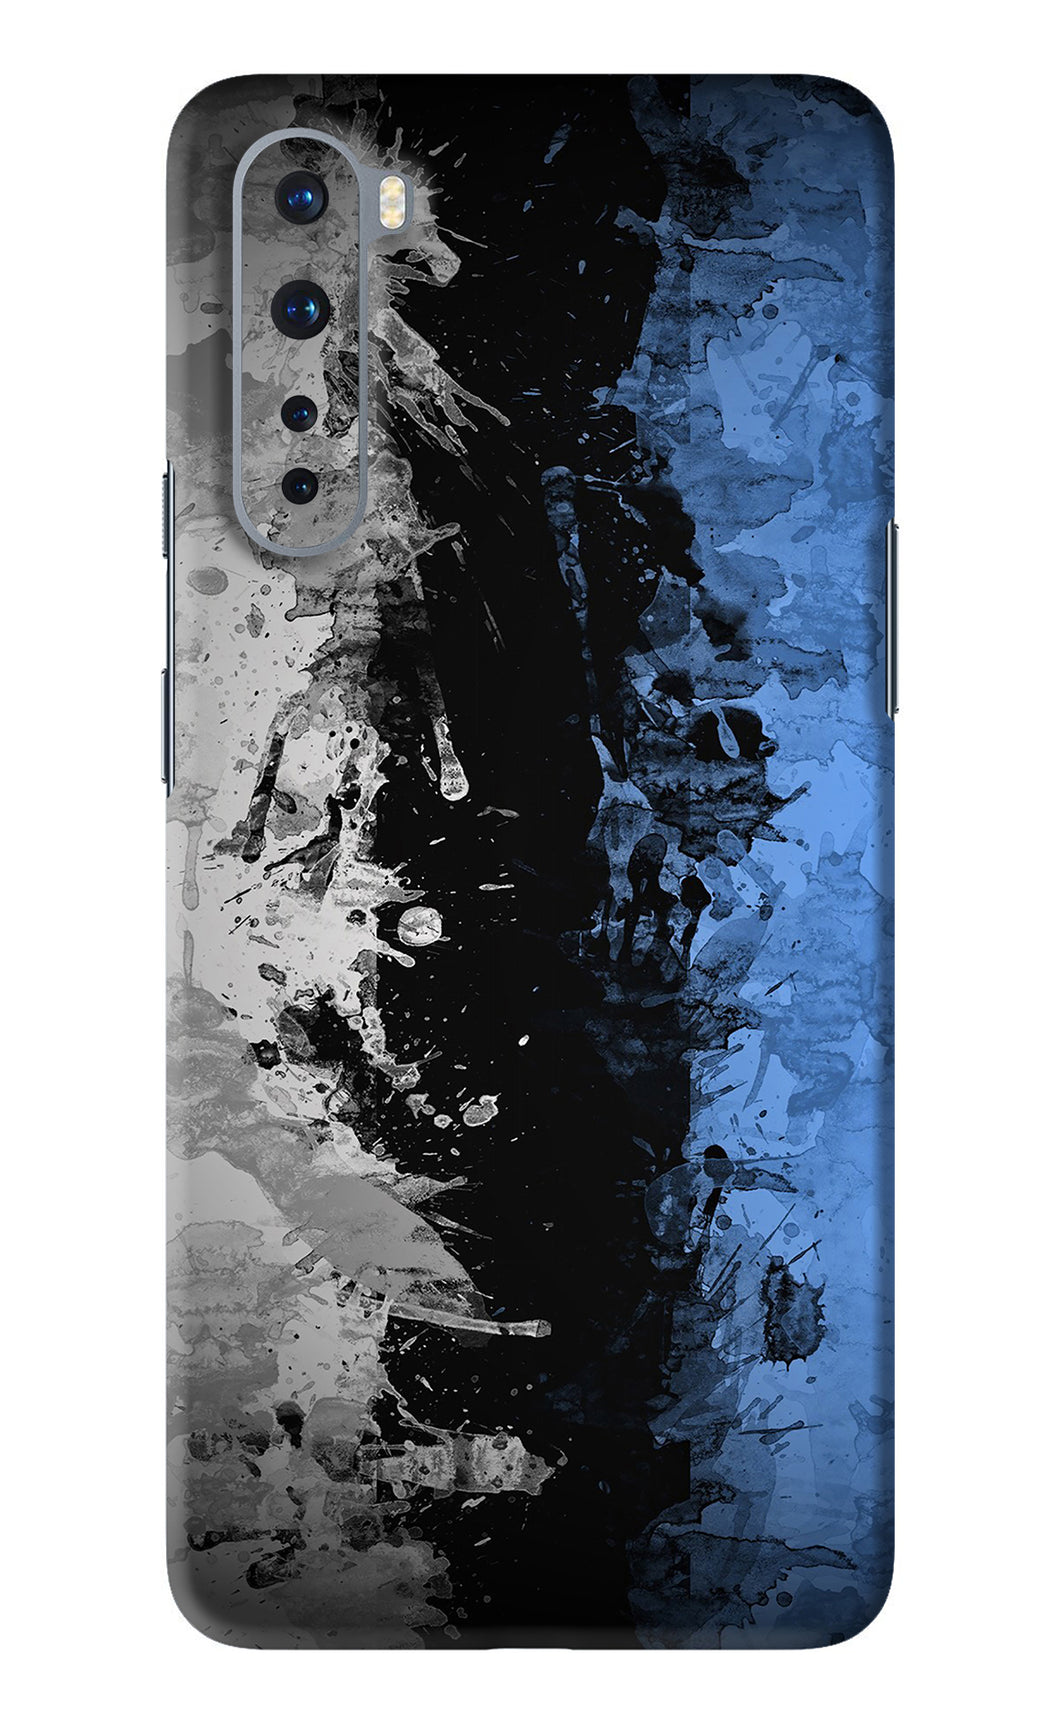 Artistic Design OnePlus Nord Back Skin Wrap